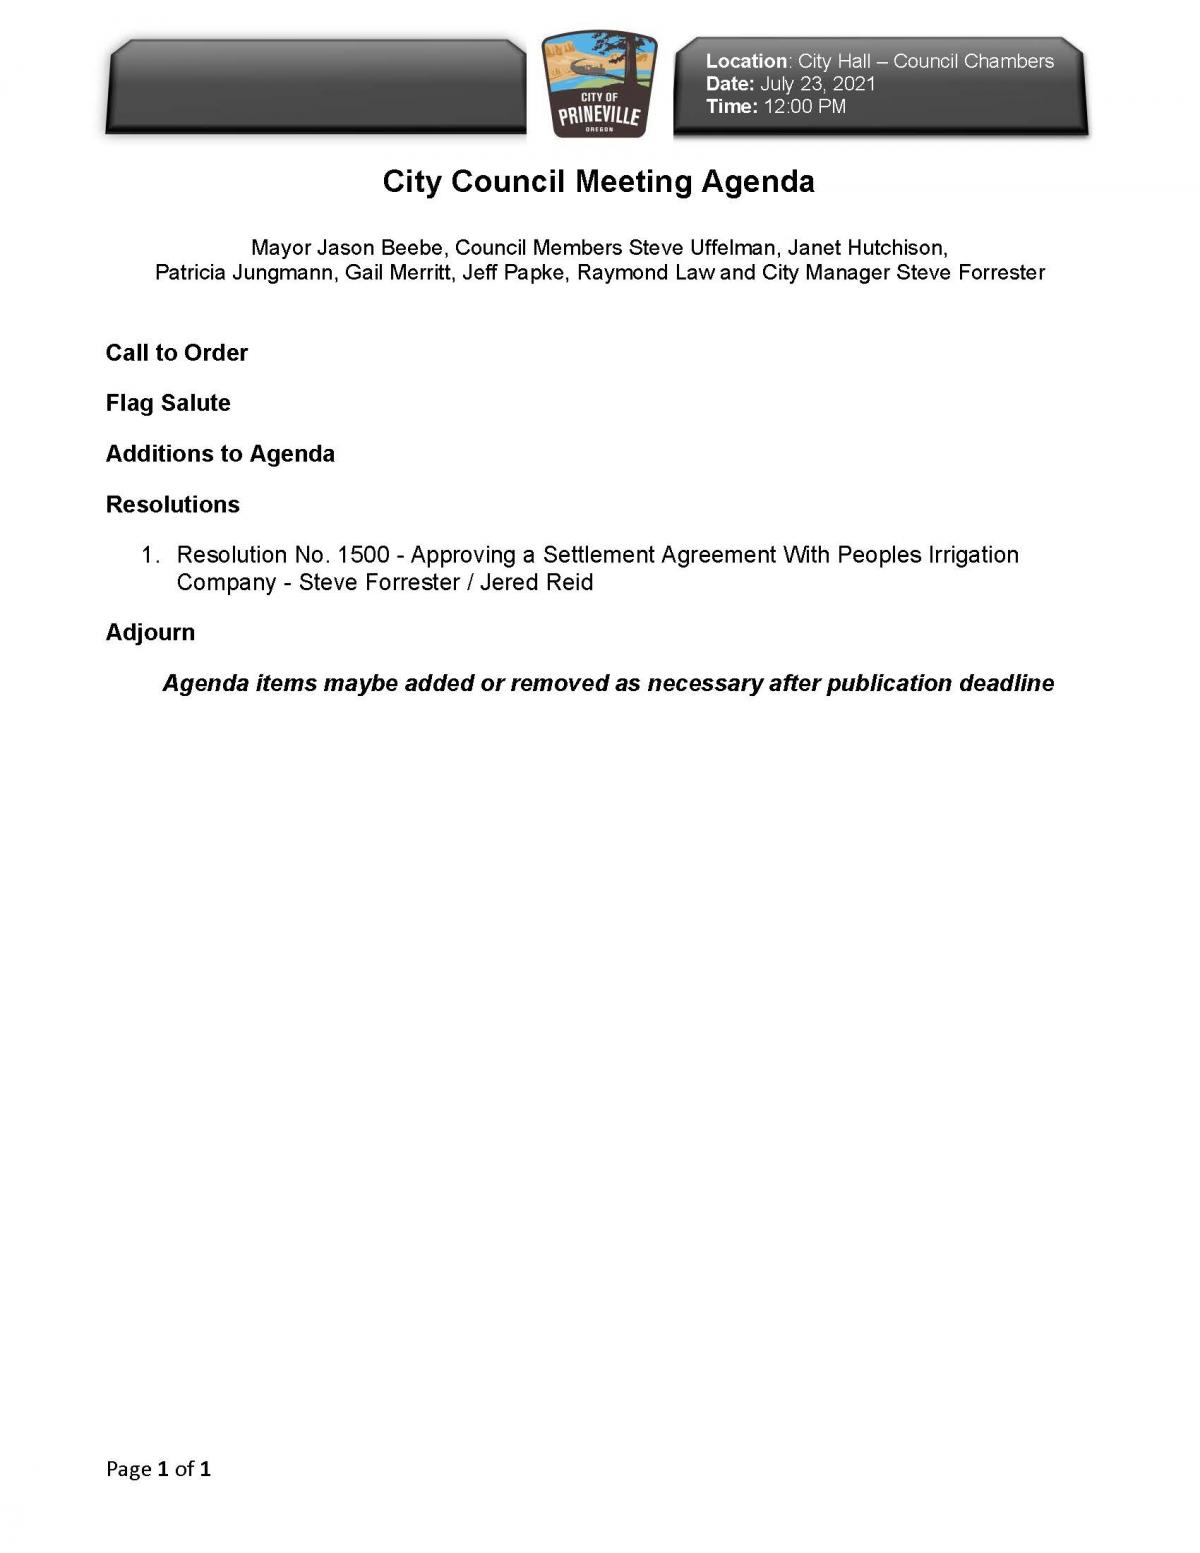 Special City Council Meeting Agenda 7-23-2021